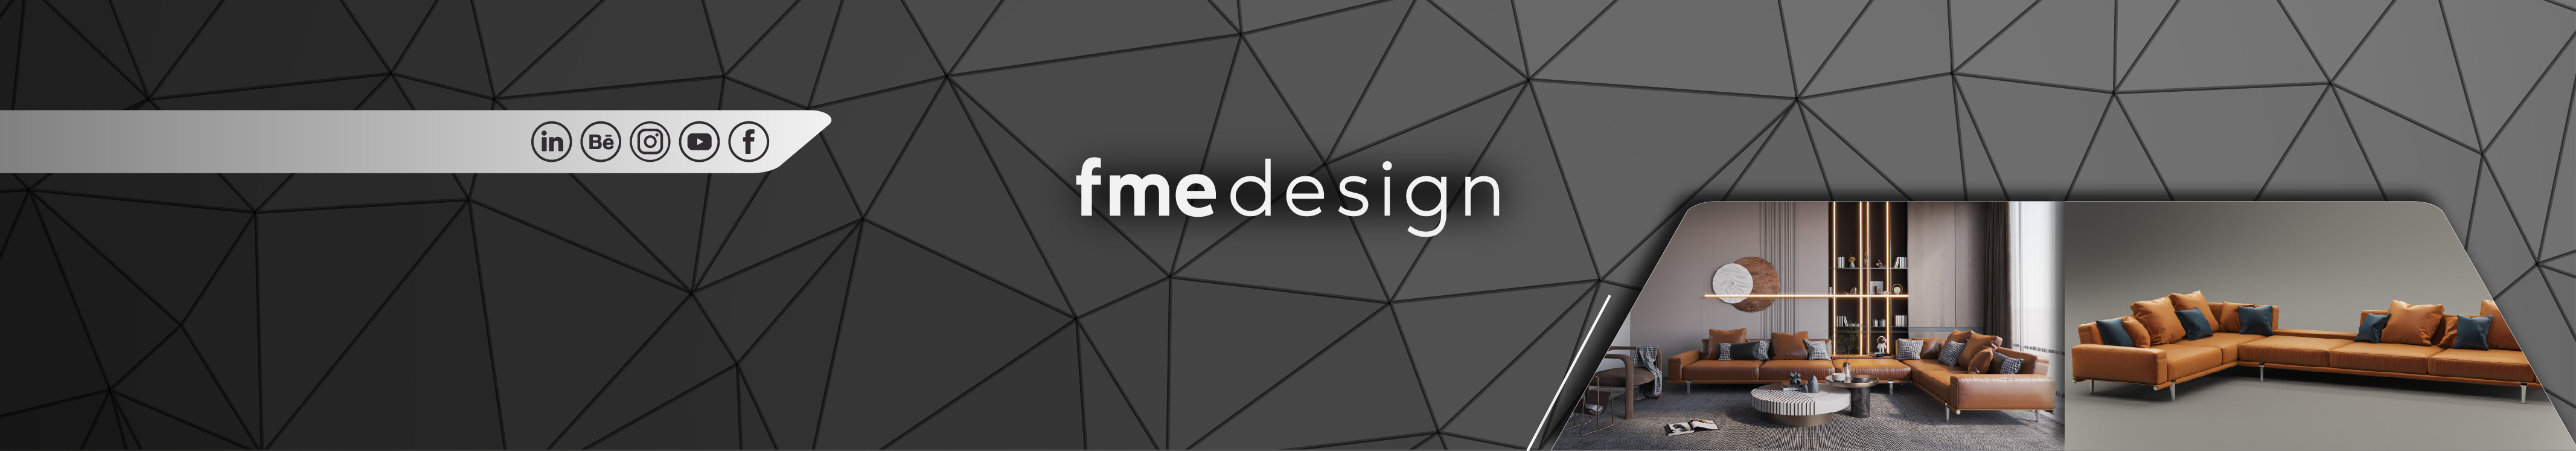 FME Design's profile banner